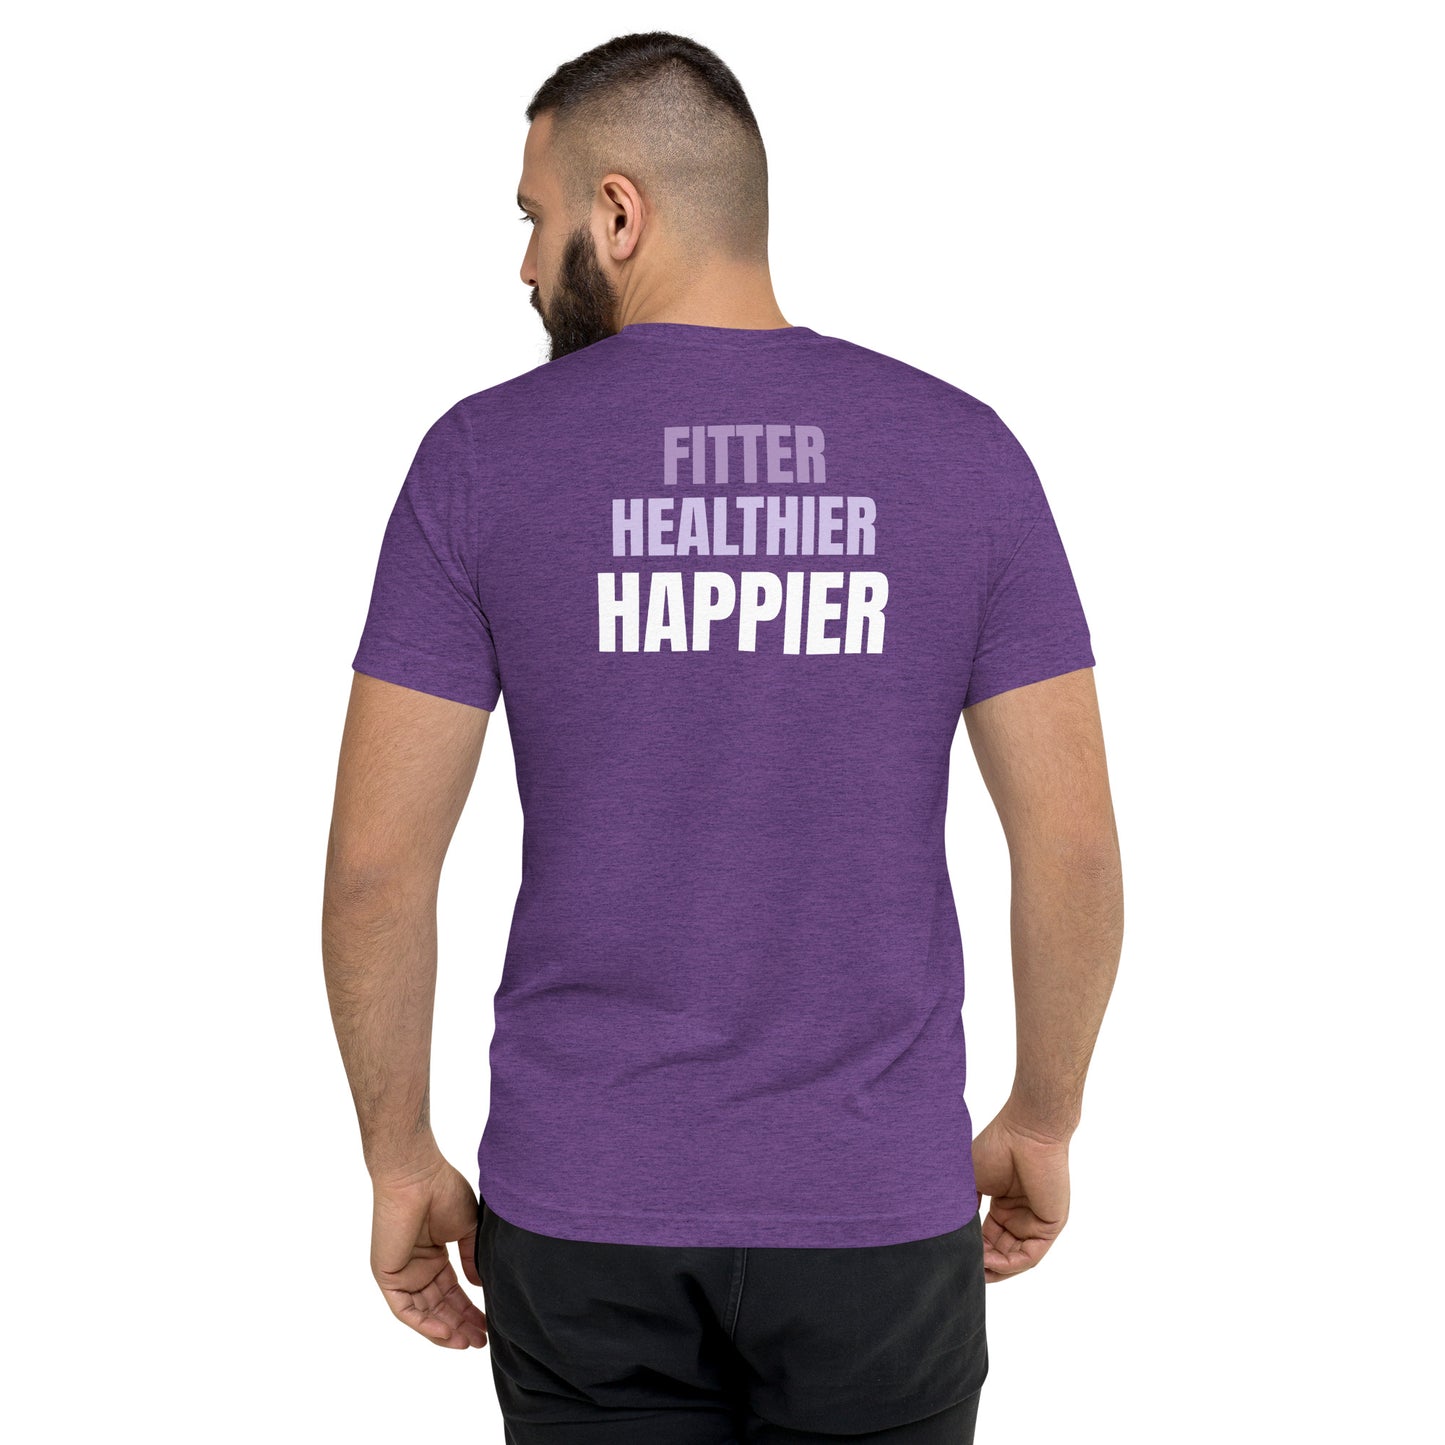 FITTER HEALTHIER HAPPIER Short sleeve t-shirt